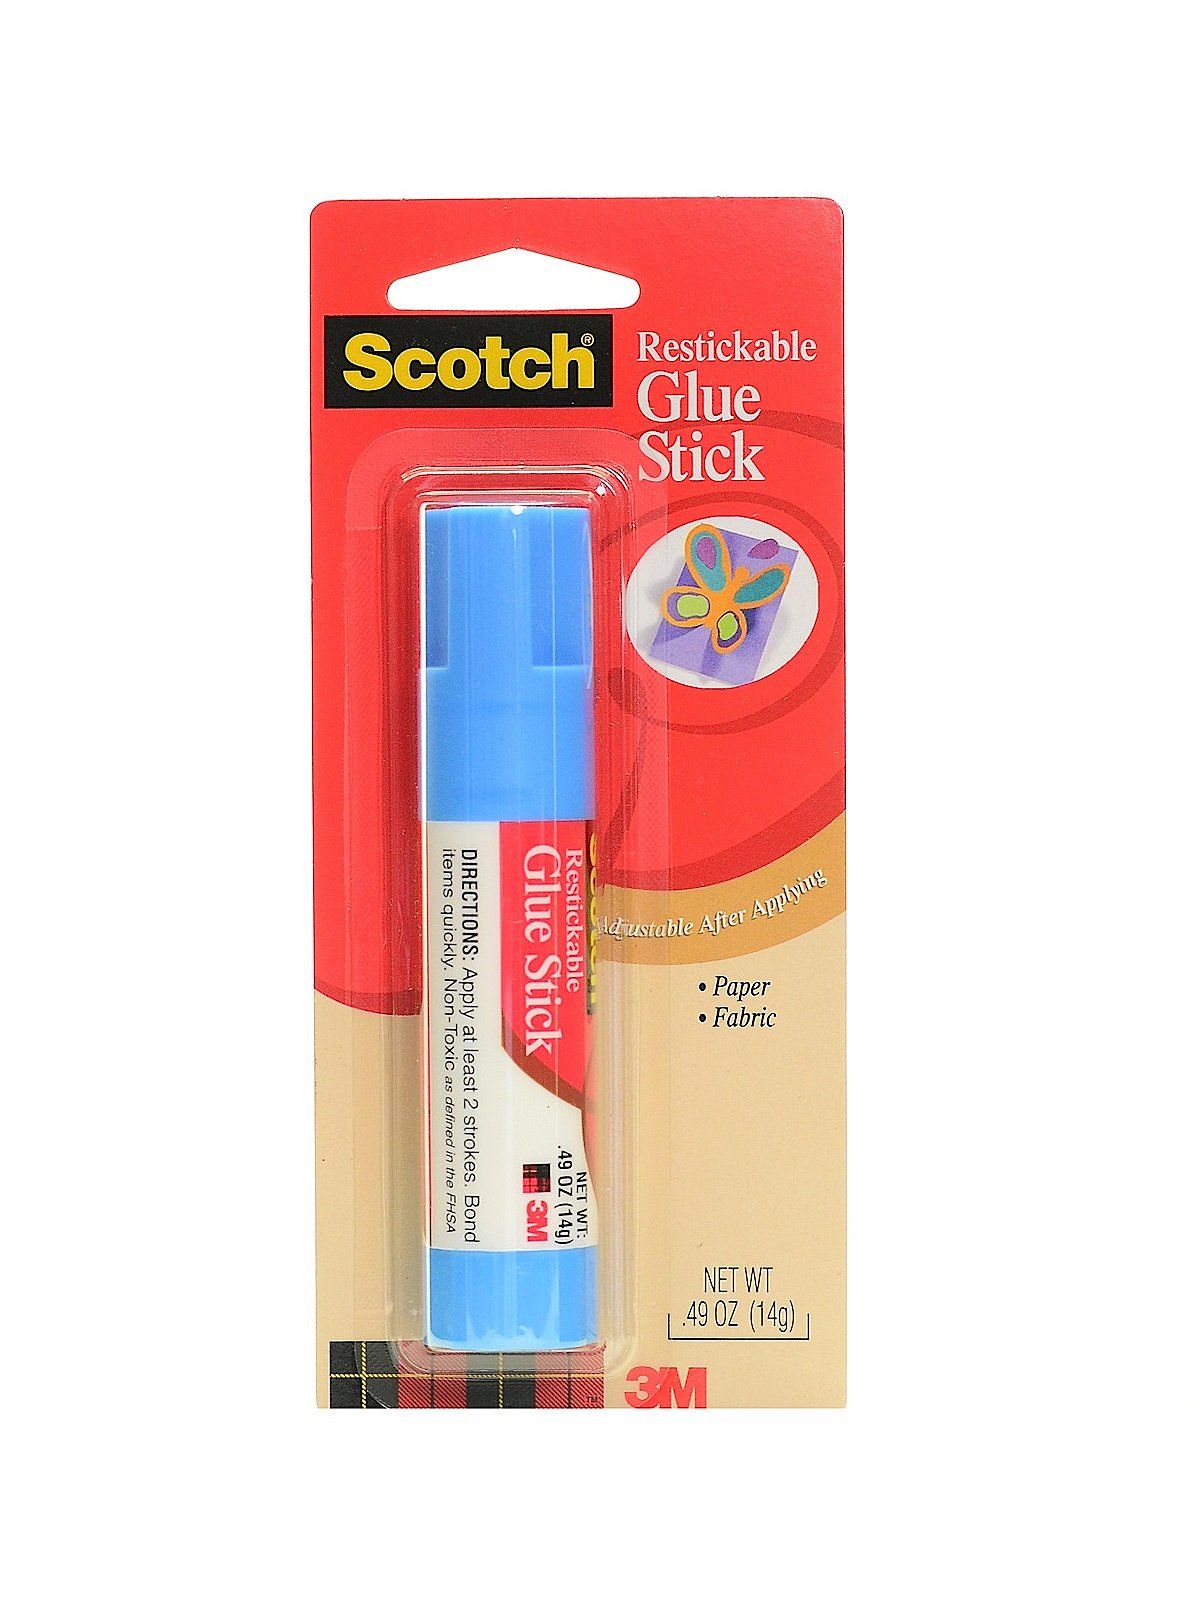 Removable Restickable Glue Stick, .49oz, Repositionable Stick, 2-Pack